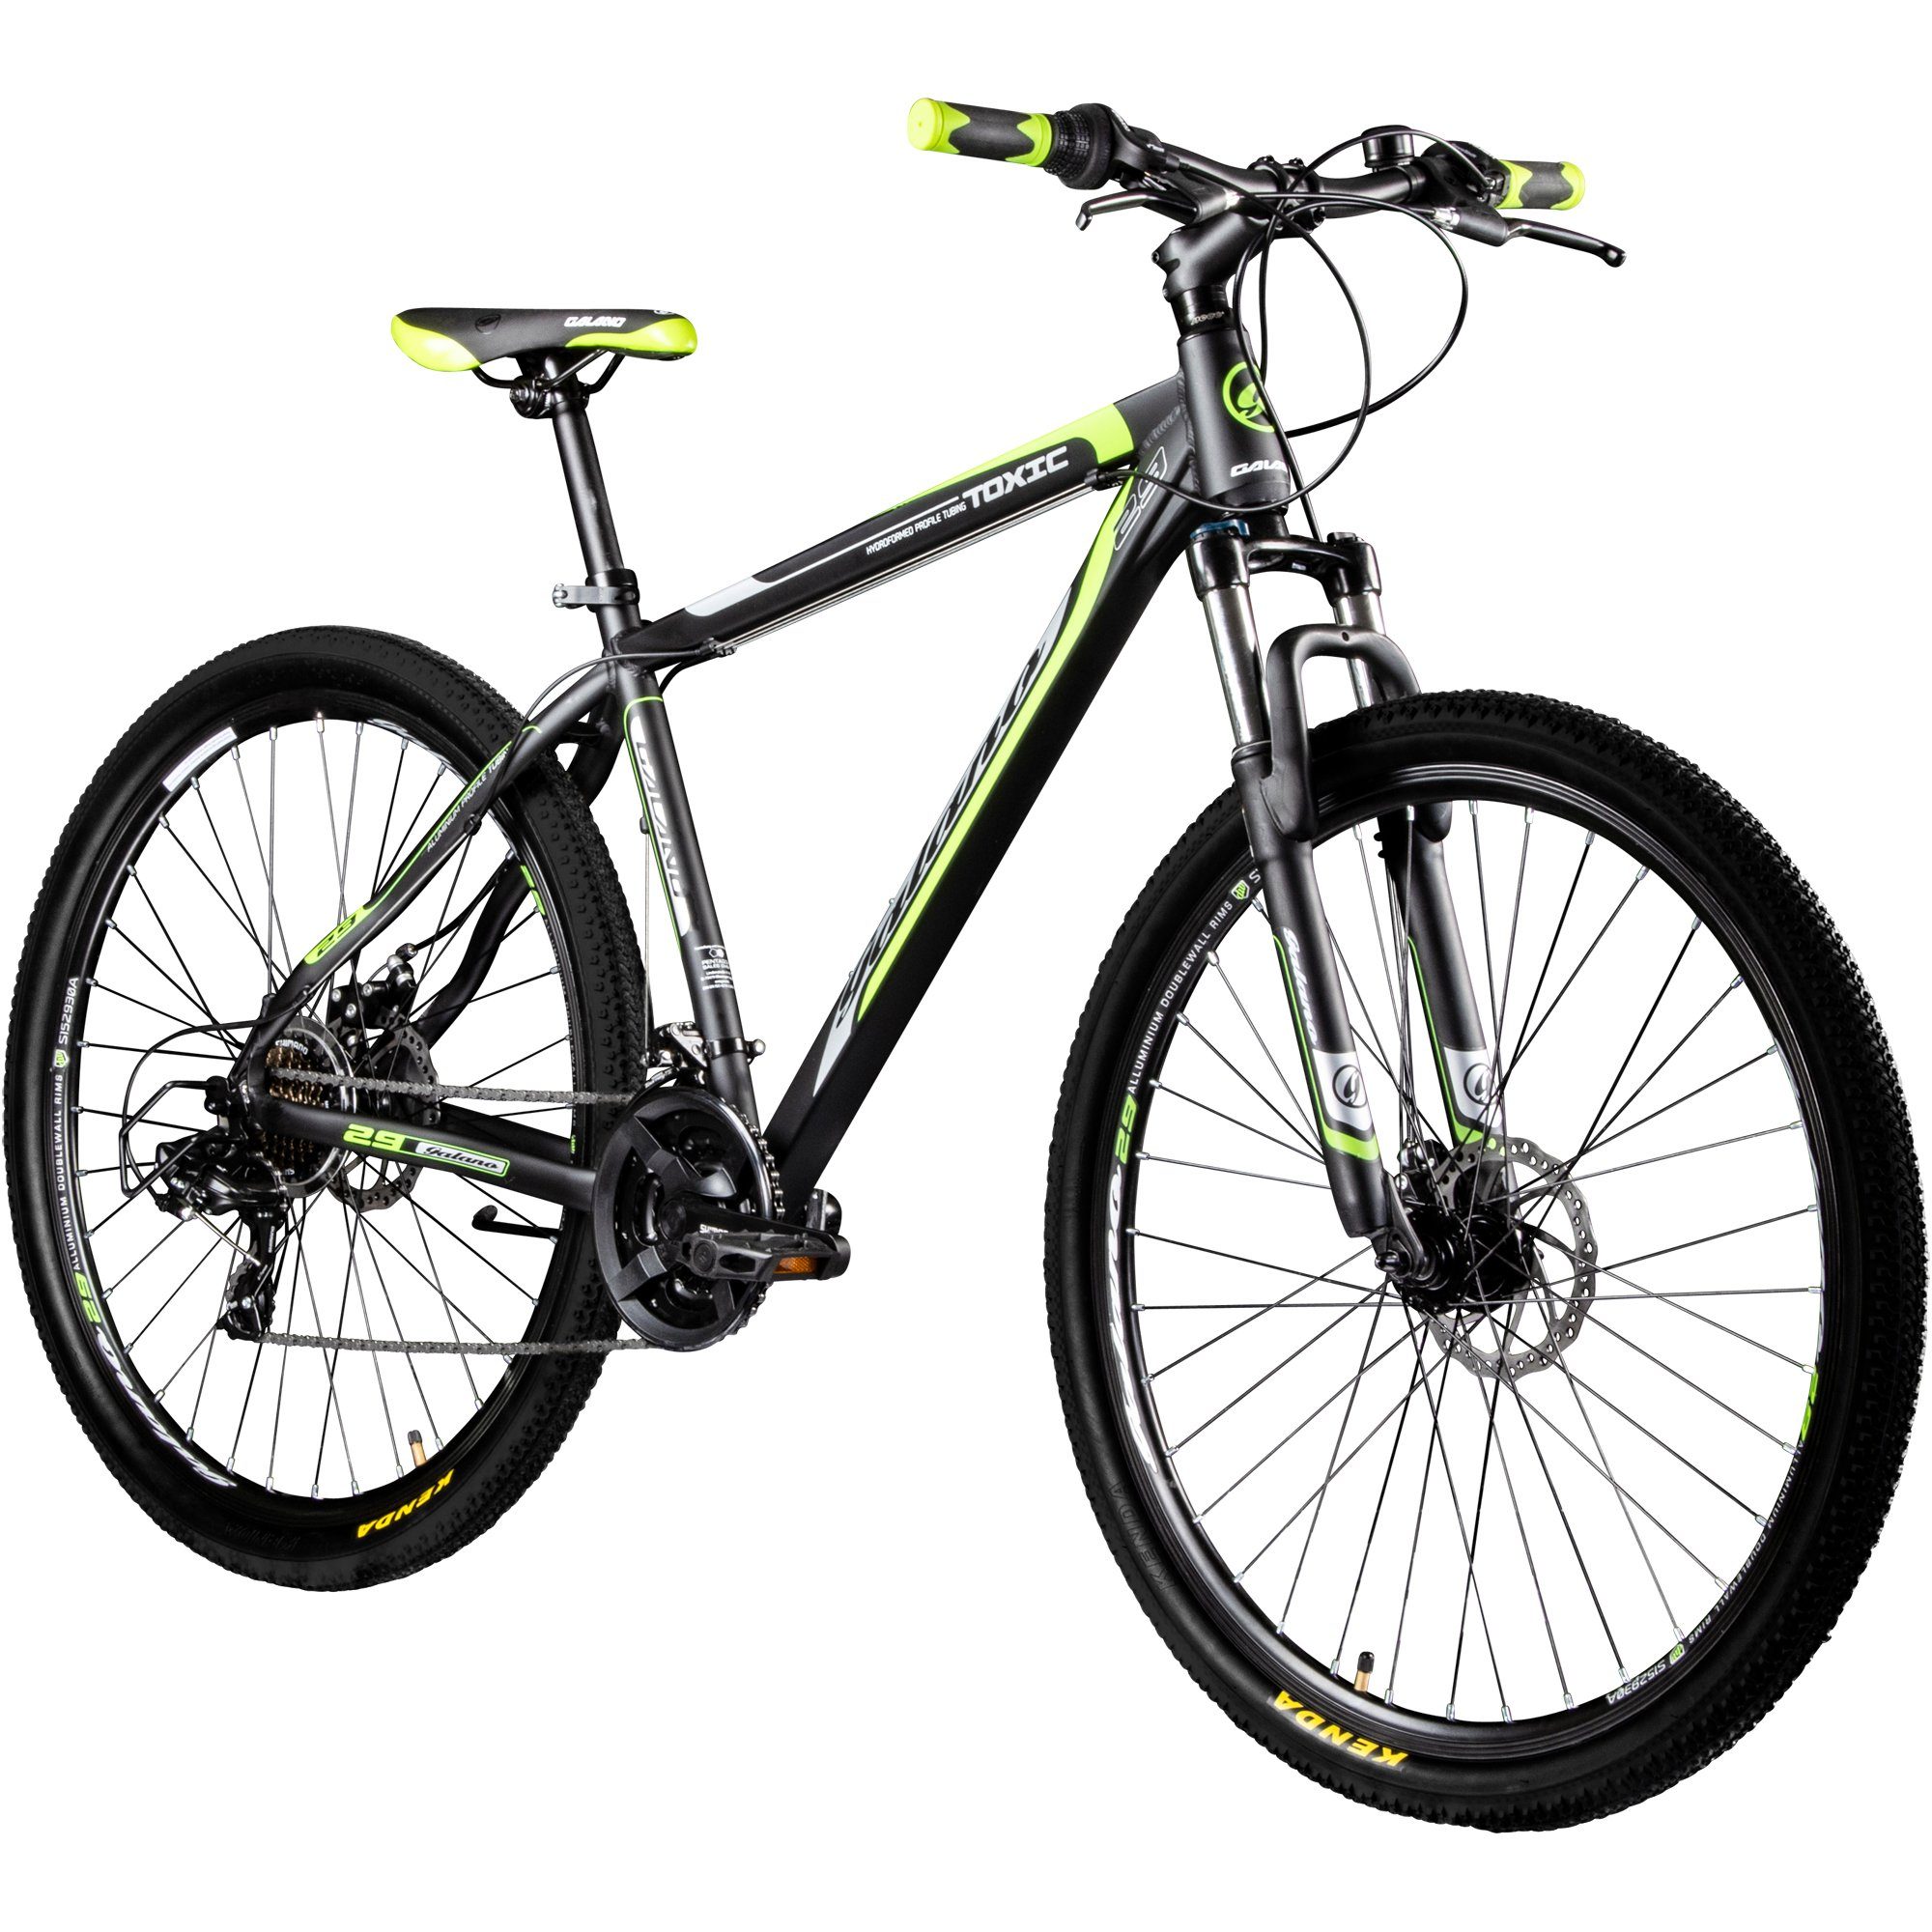 Galano Mountainbike Toxic 29", 21 Gang, Kettenschaltung, Mountainbike Hardtail 29 Zoll für Erwachsene ab 175 cm MTB Fahrrad